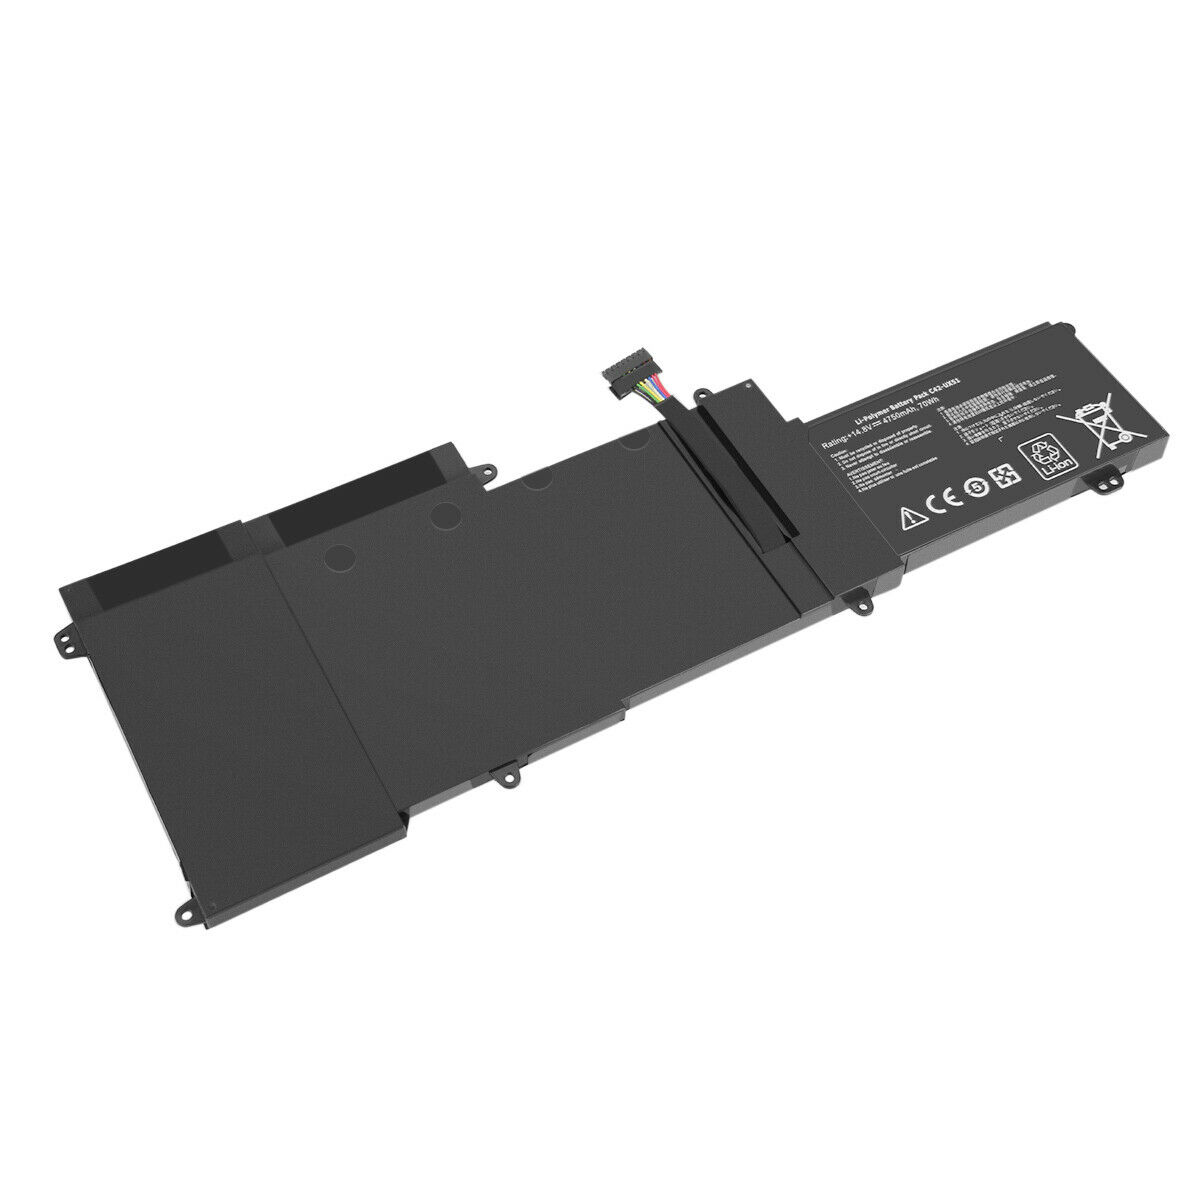 C42-UX51 ASUS ZenBook UX51 UX51V UX51VZ U500 U500V U500VZ compatible battery